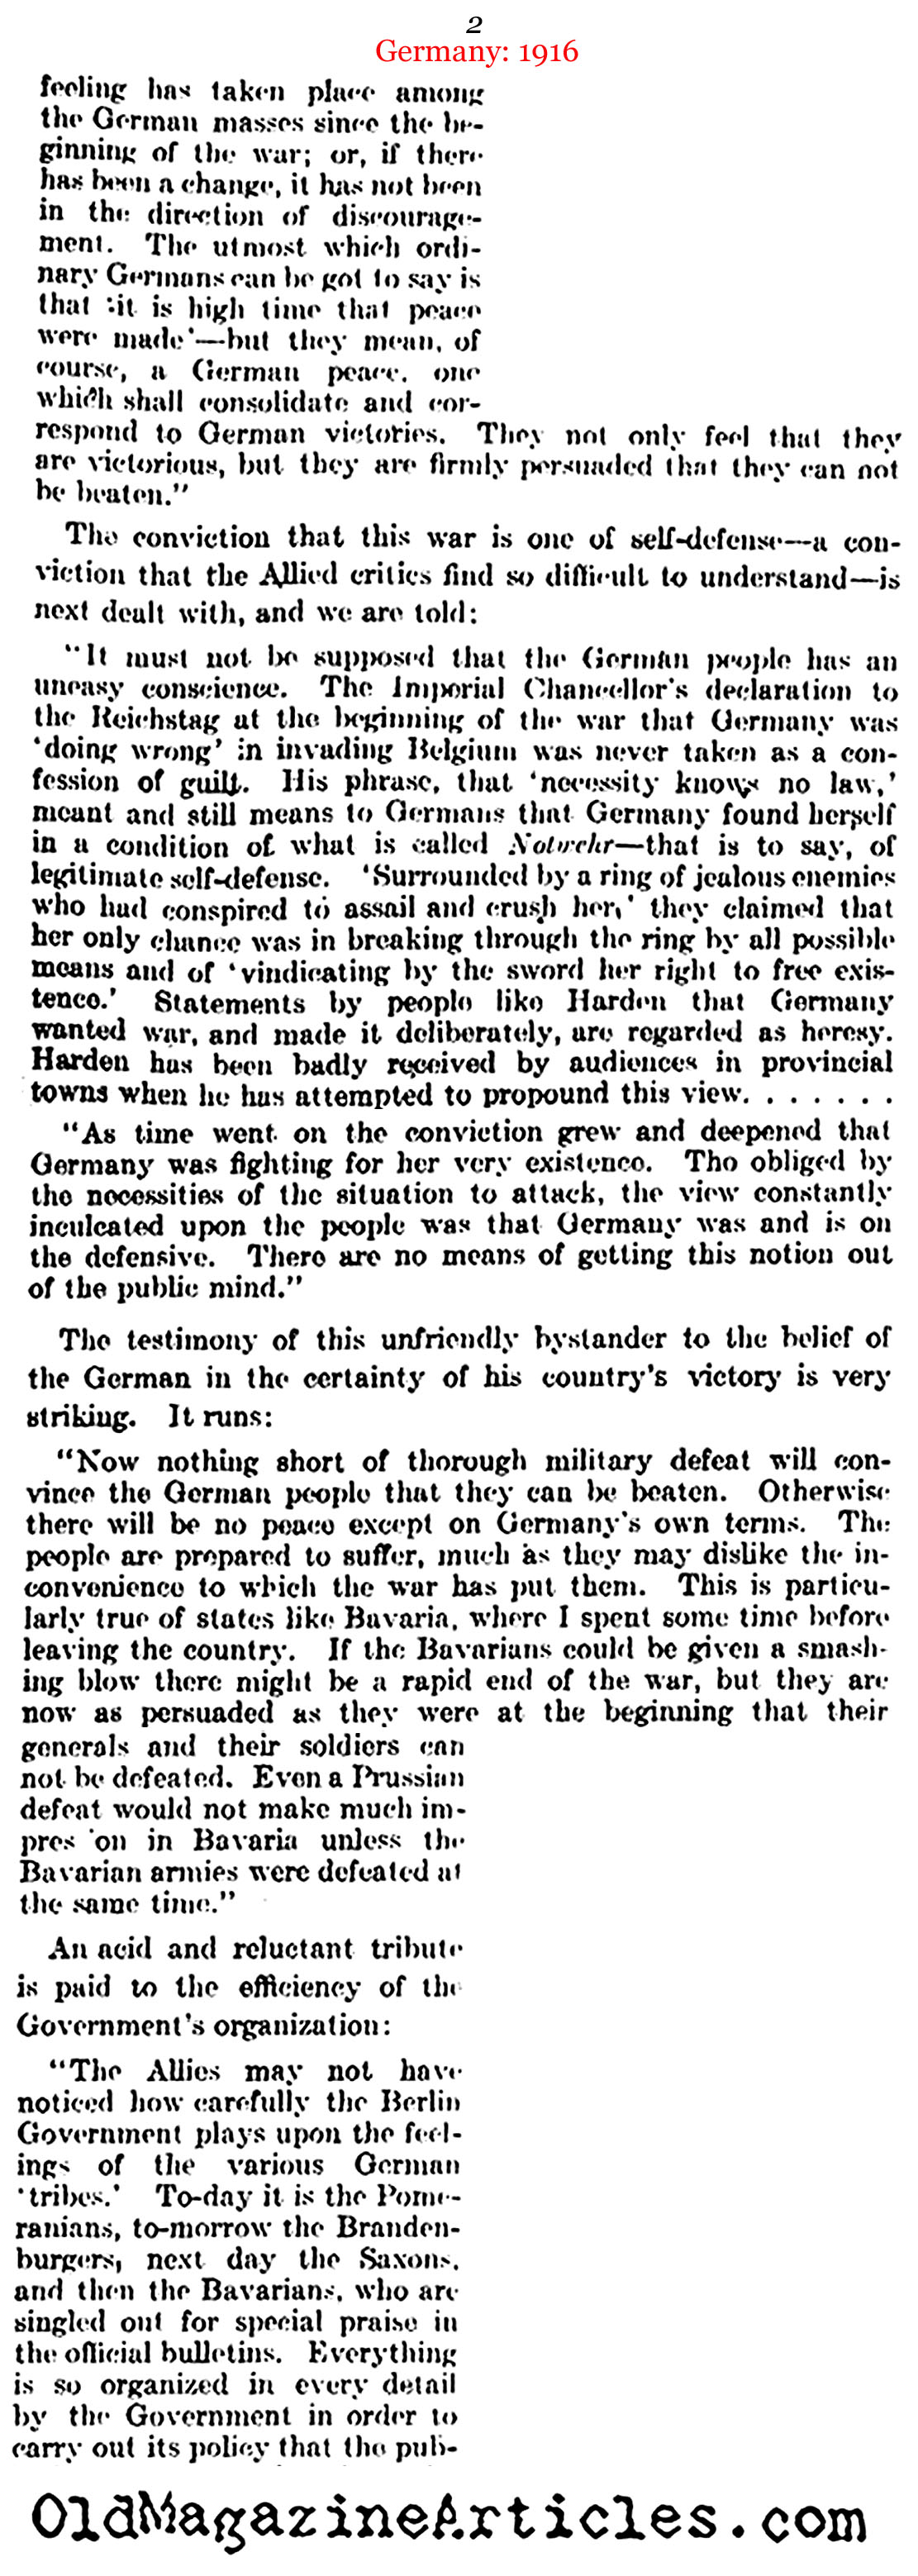 Grim Determination on the German Home Front   (Literary Digest, 1916)